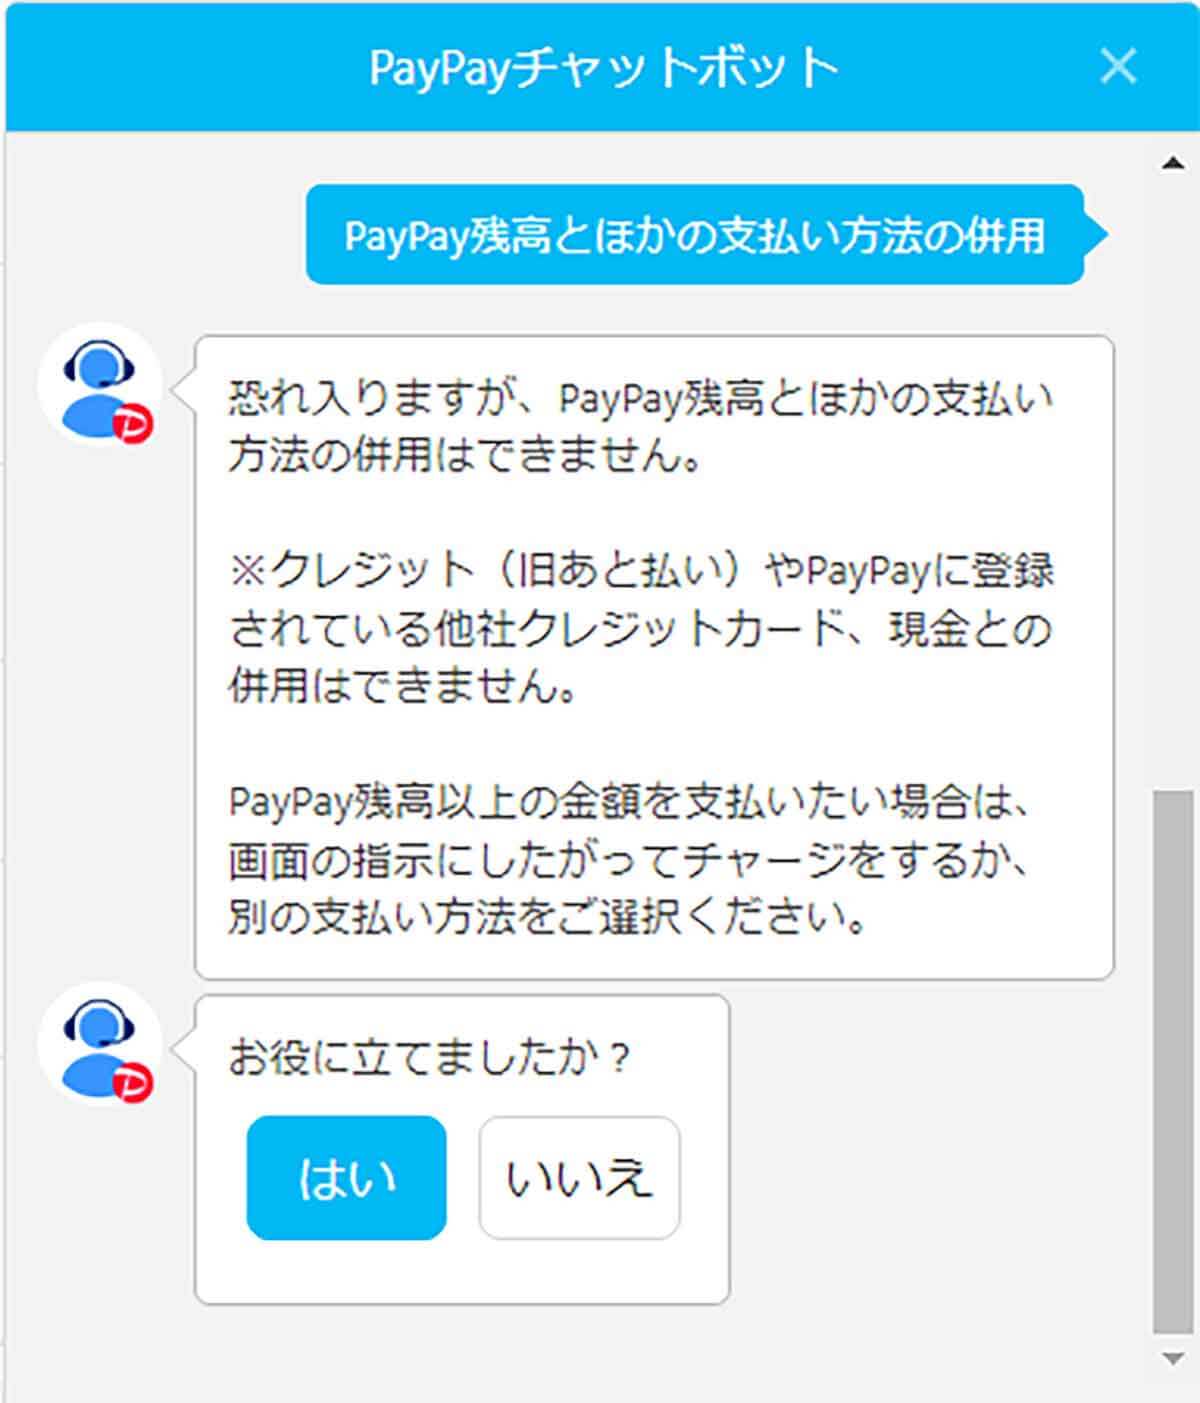 PayPay公式サイトのチャットボット